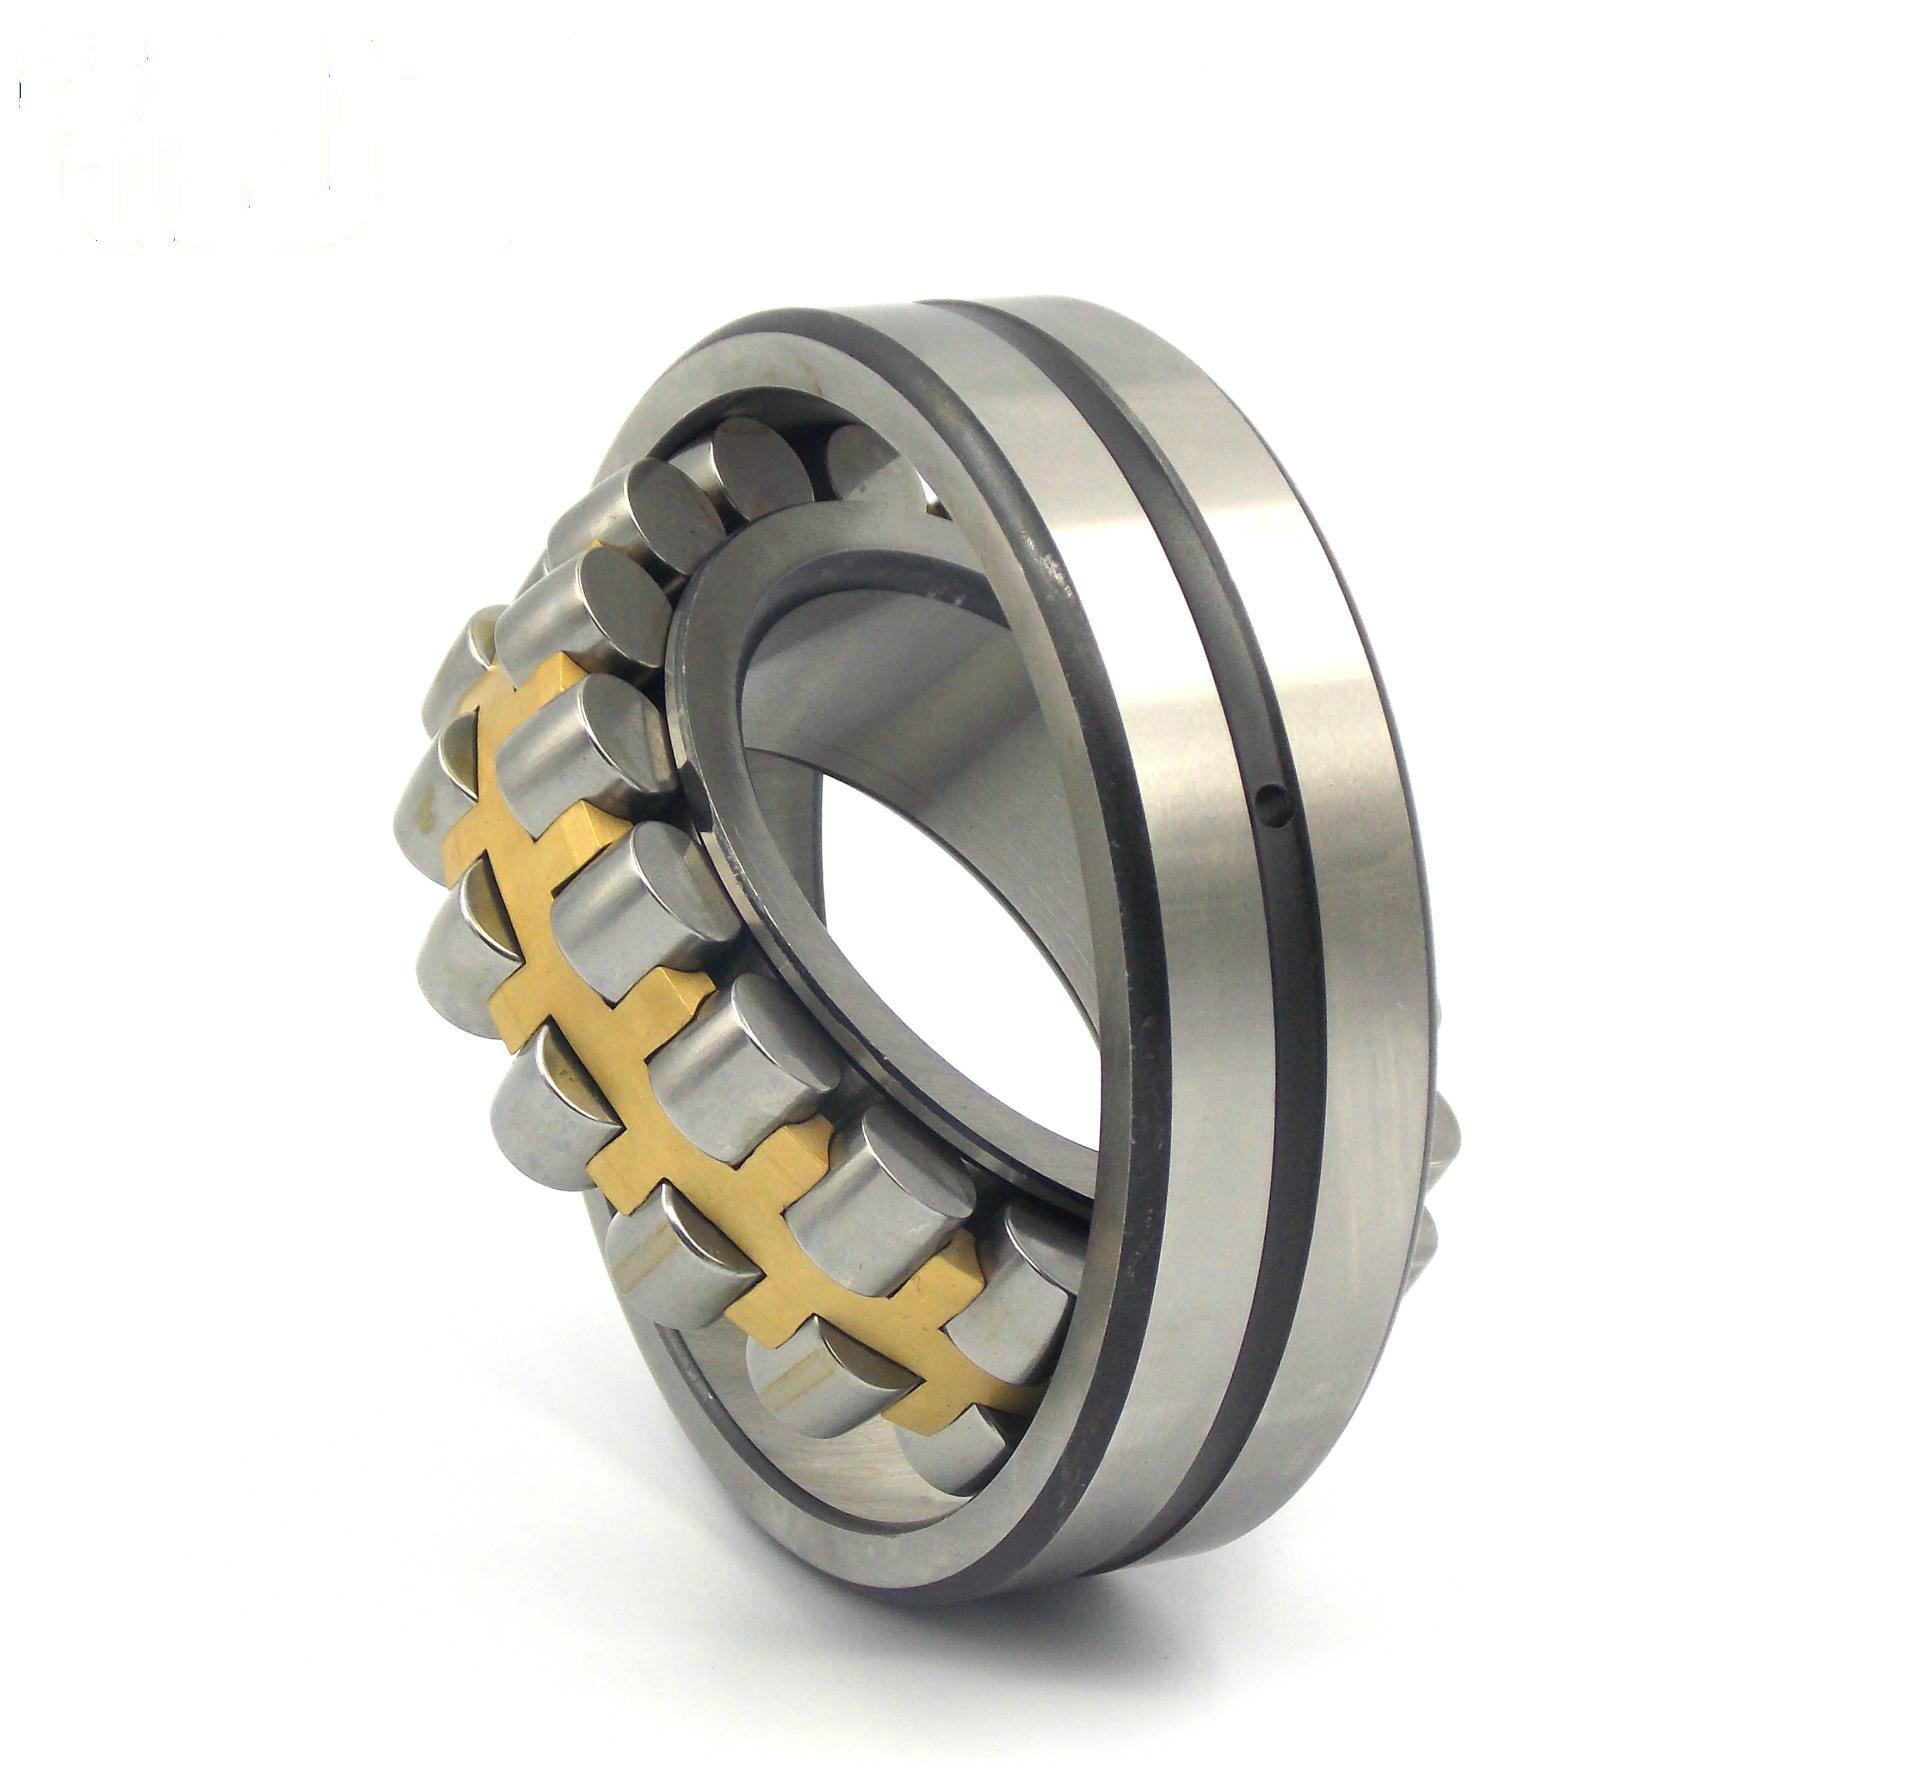  NJ 220 ECP Cylindrical roller bearing